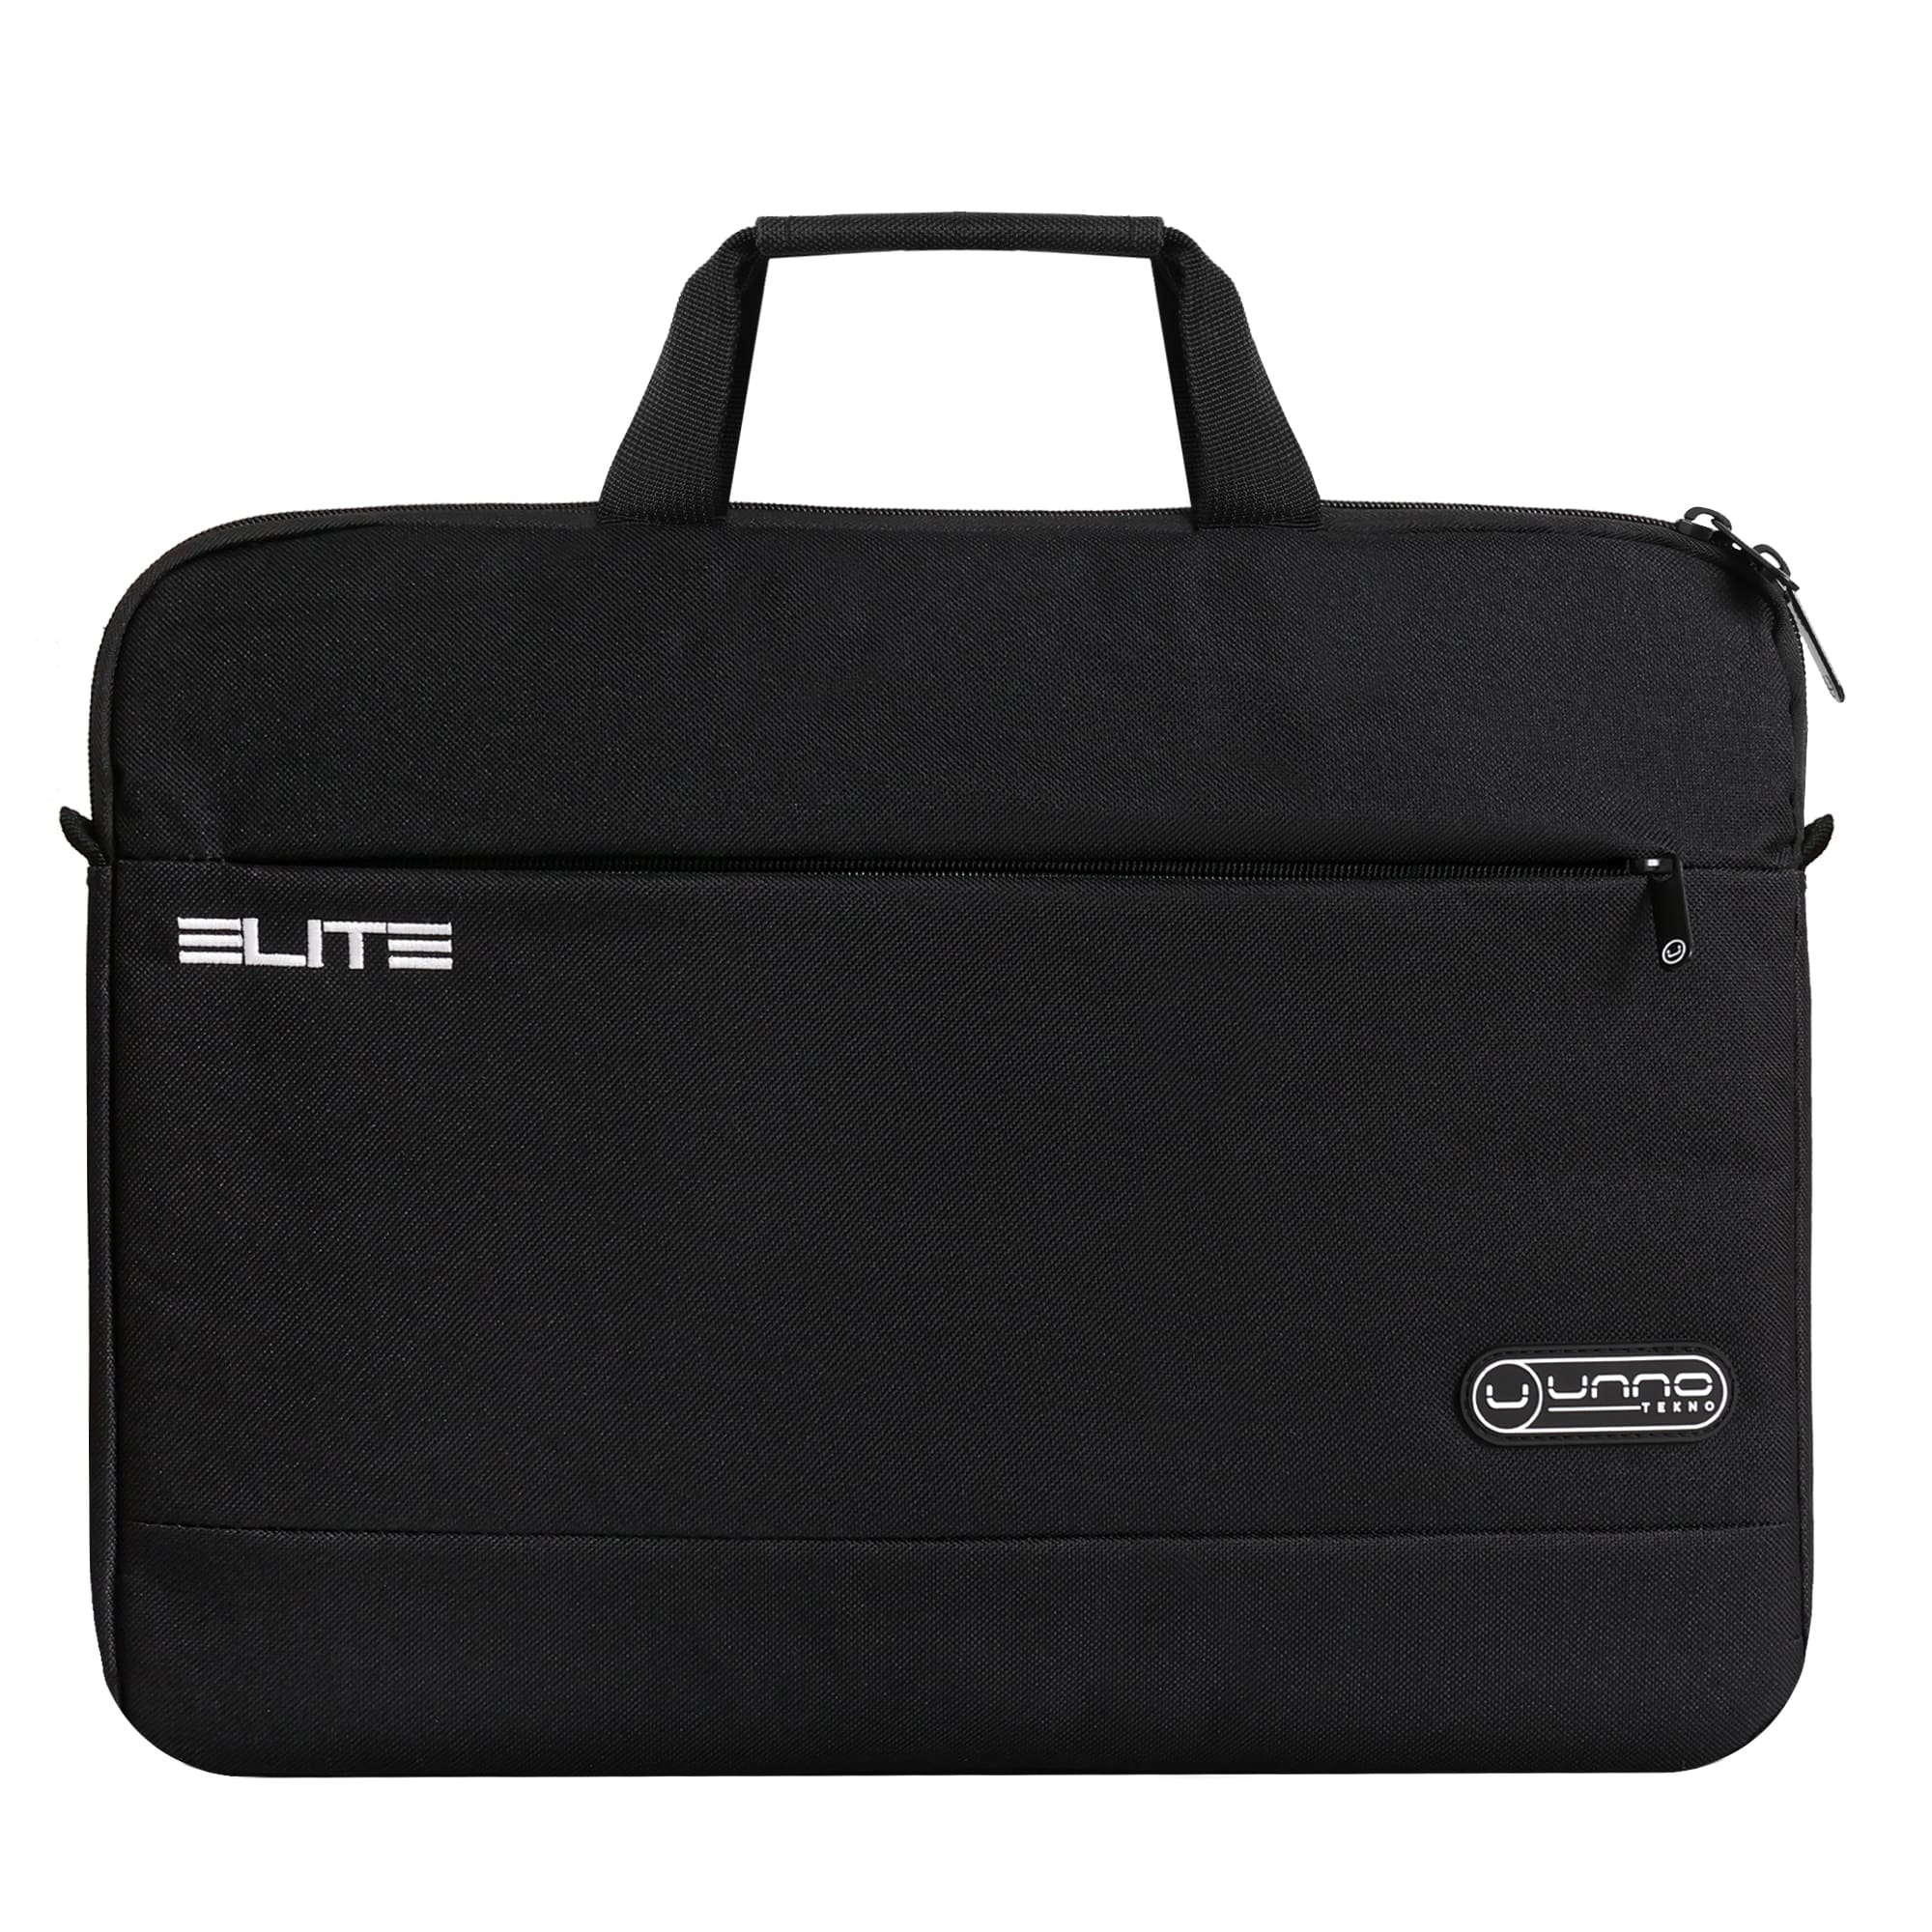 Bulto Laptop 15.6 Unno Elite Black Bg2711bk